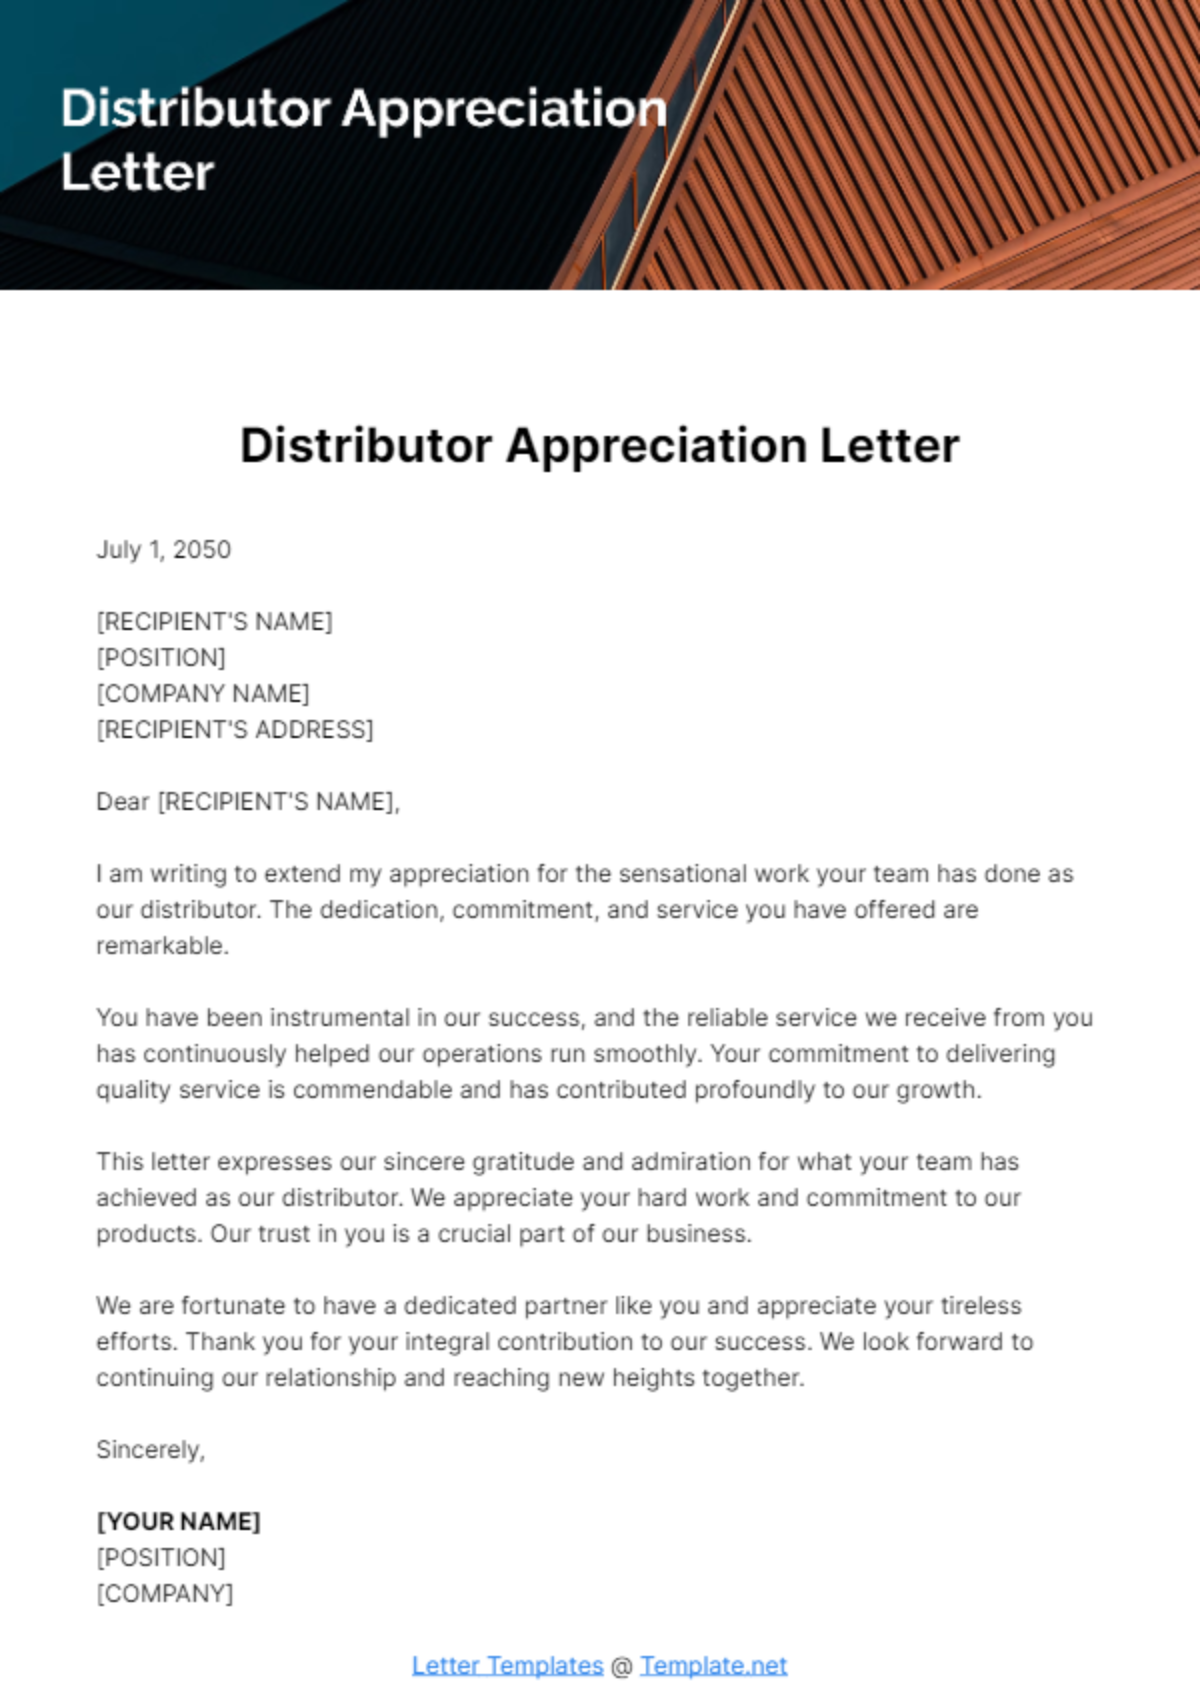 Free Distributor Appreciation Letter Template